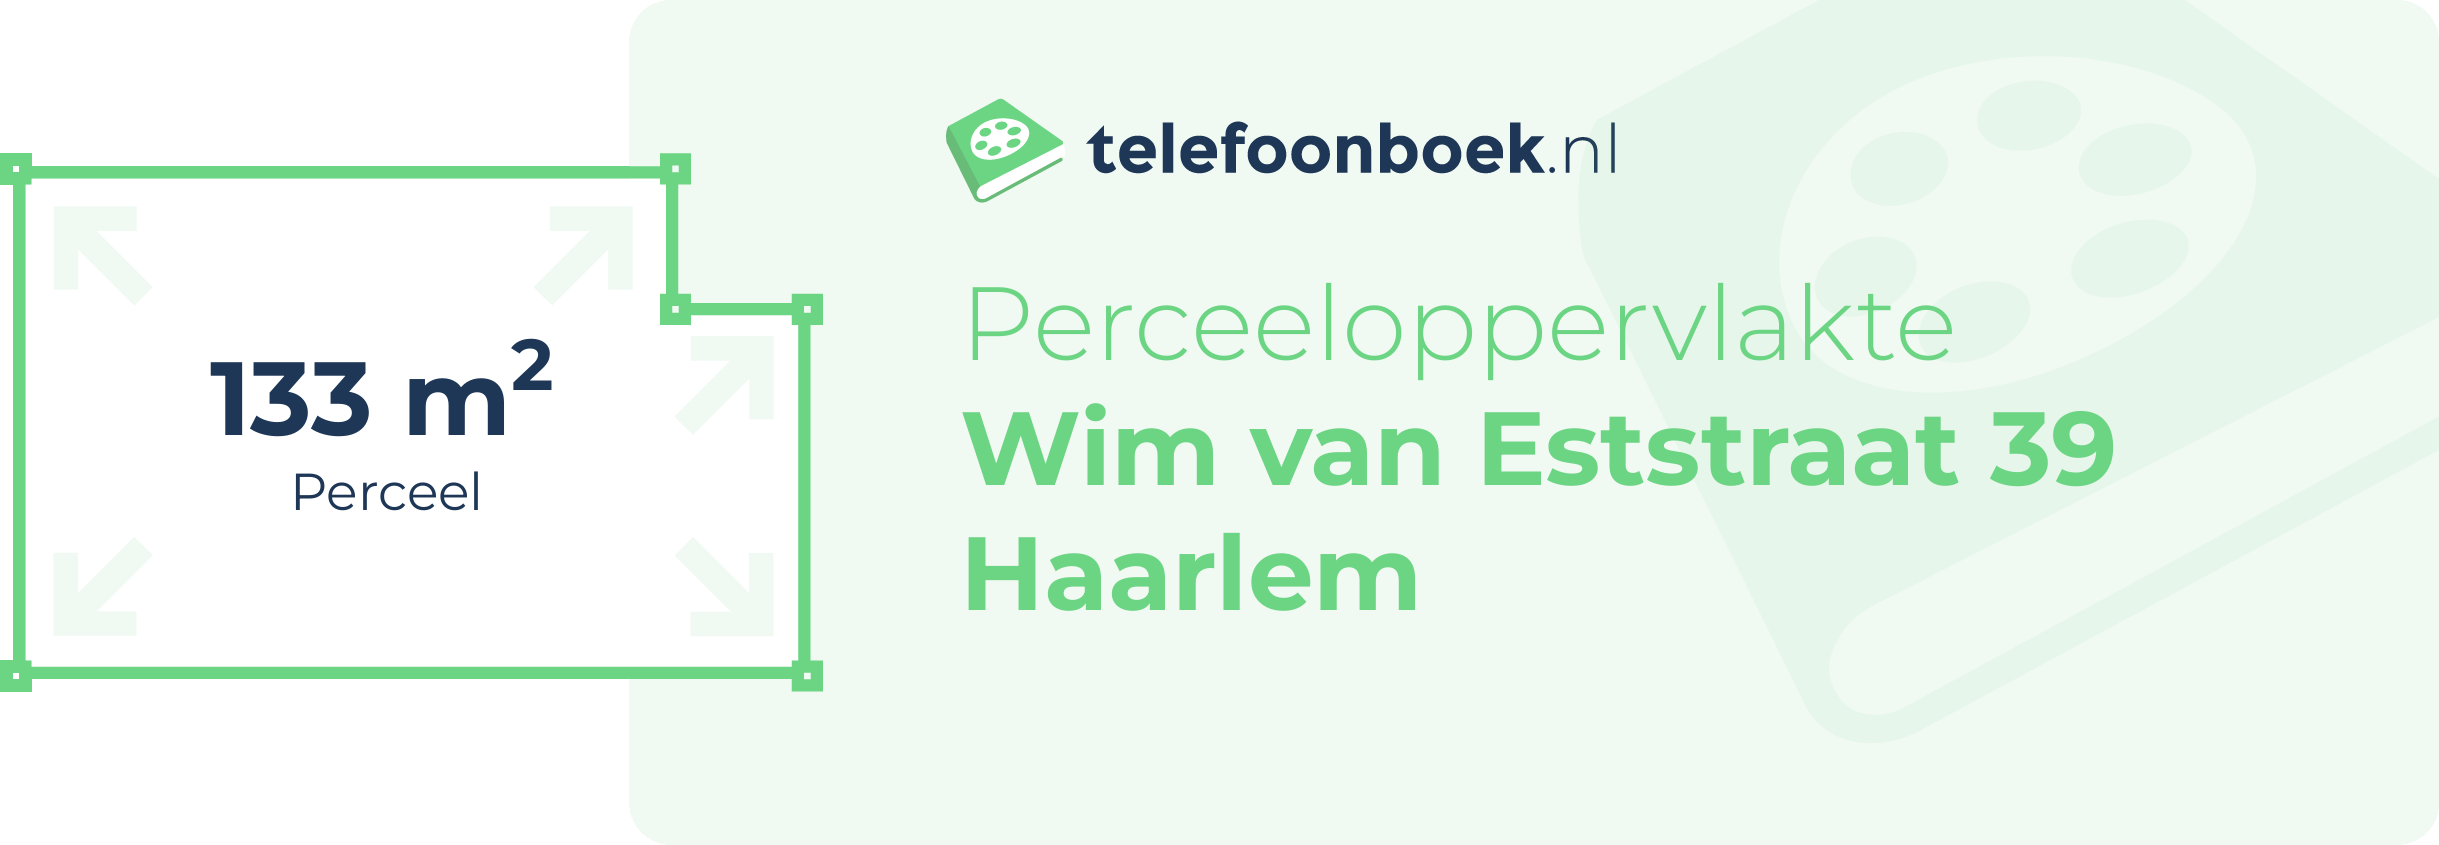 Perceeloppervlakte Wim Van Eststraat 39 Haarlem